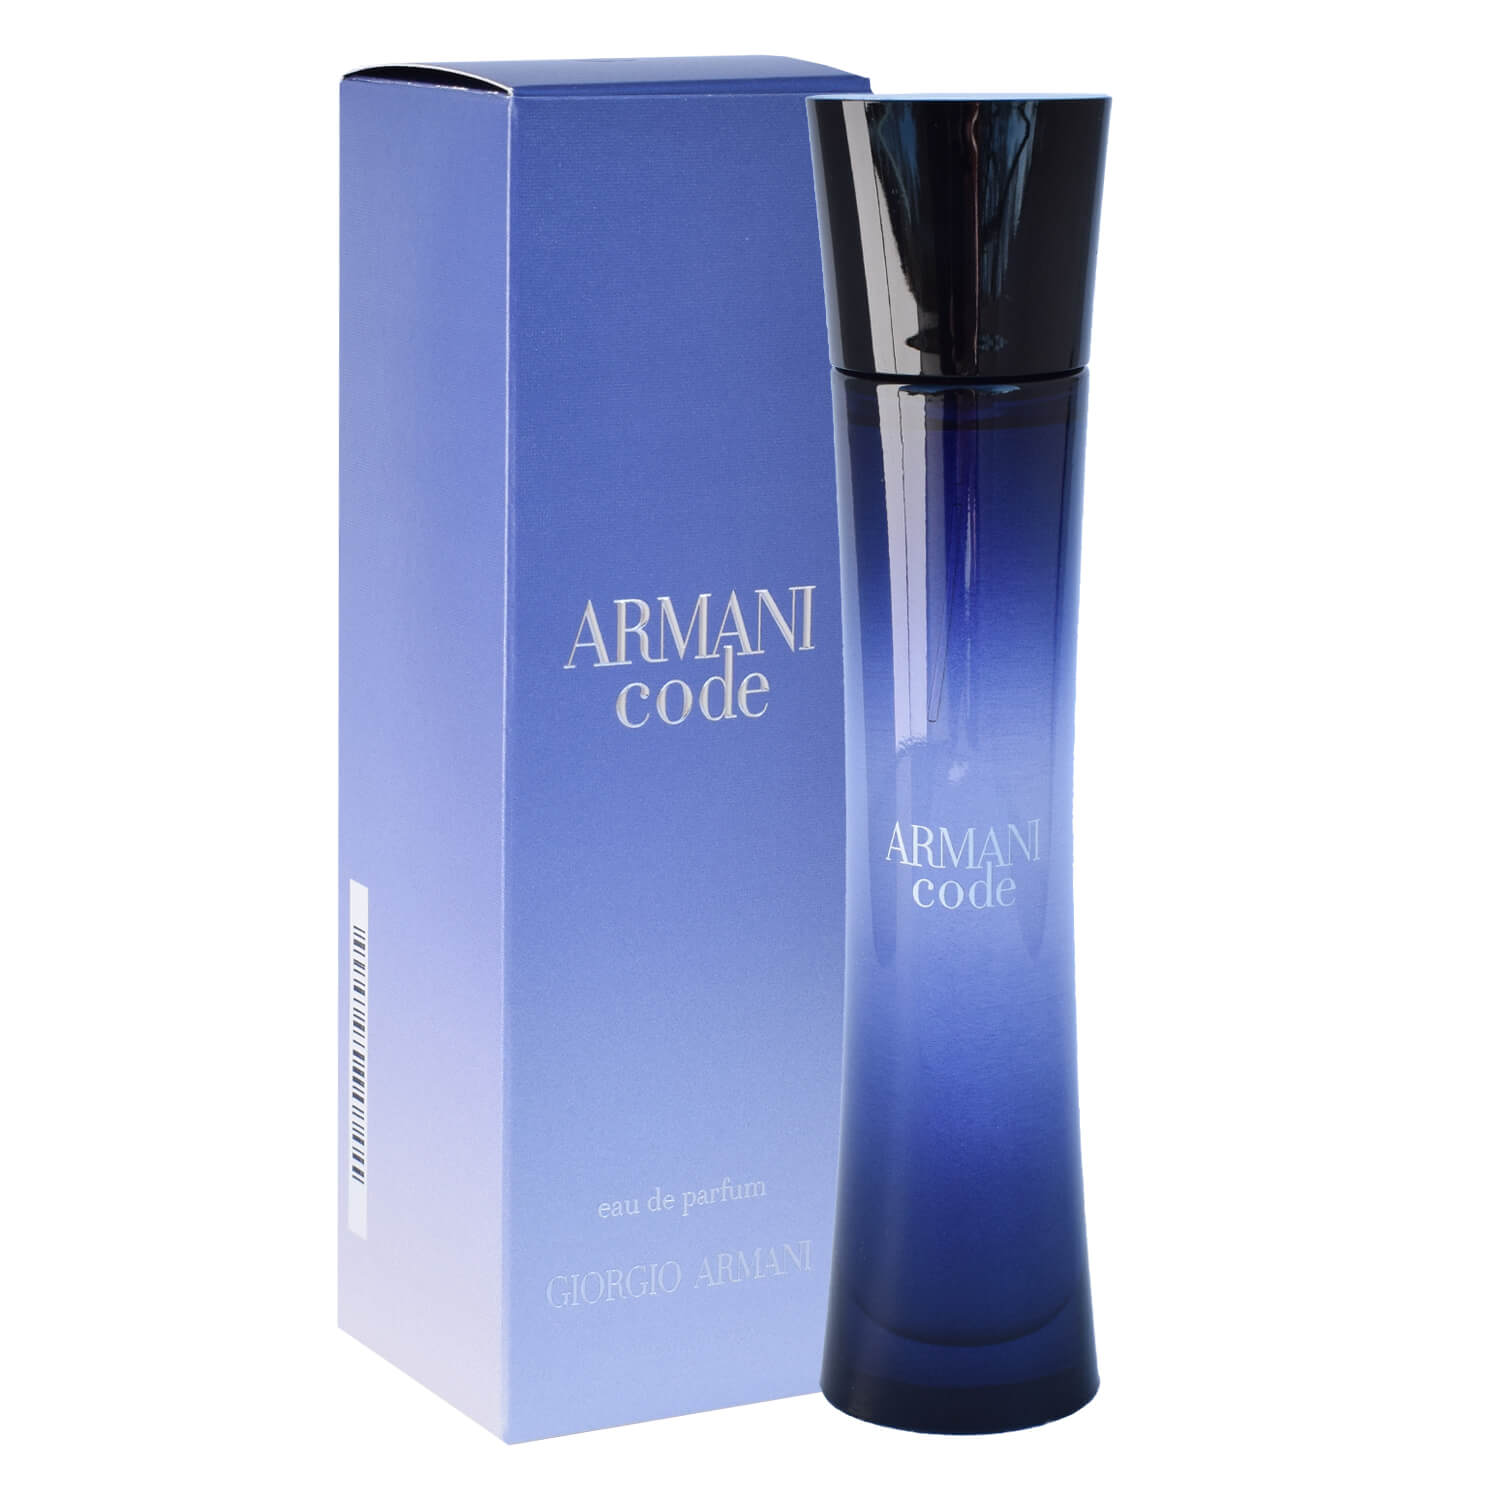 Parfum, Uhren & Schmuck bei MyRich.de entdecken - Giorgio Armani Code Femme Eau de Parfum 50 ml Parfüm EDP Spray